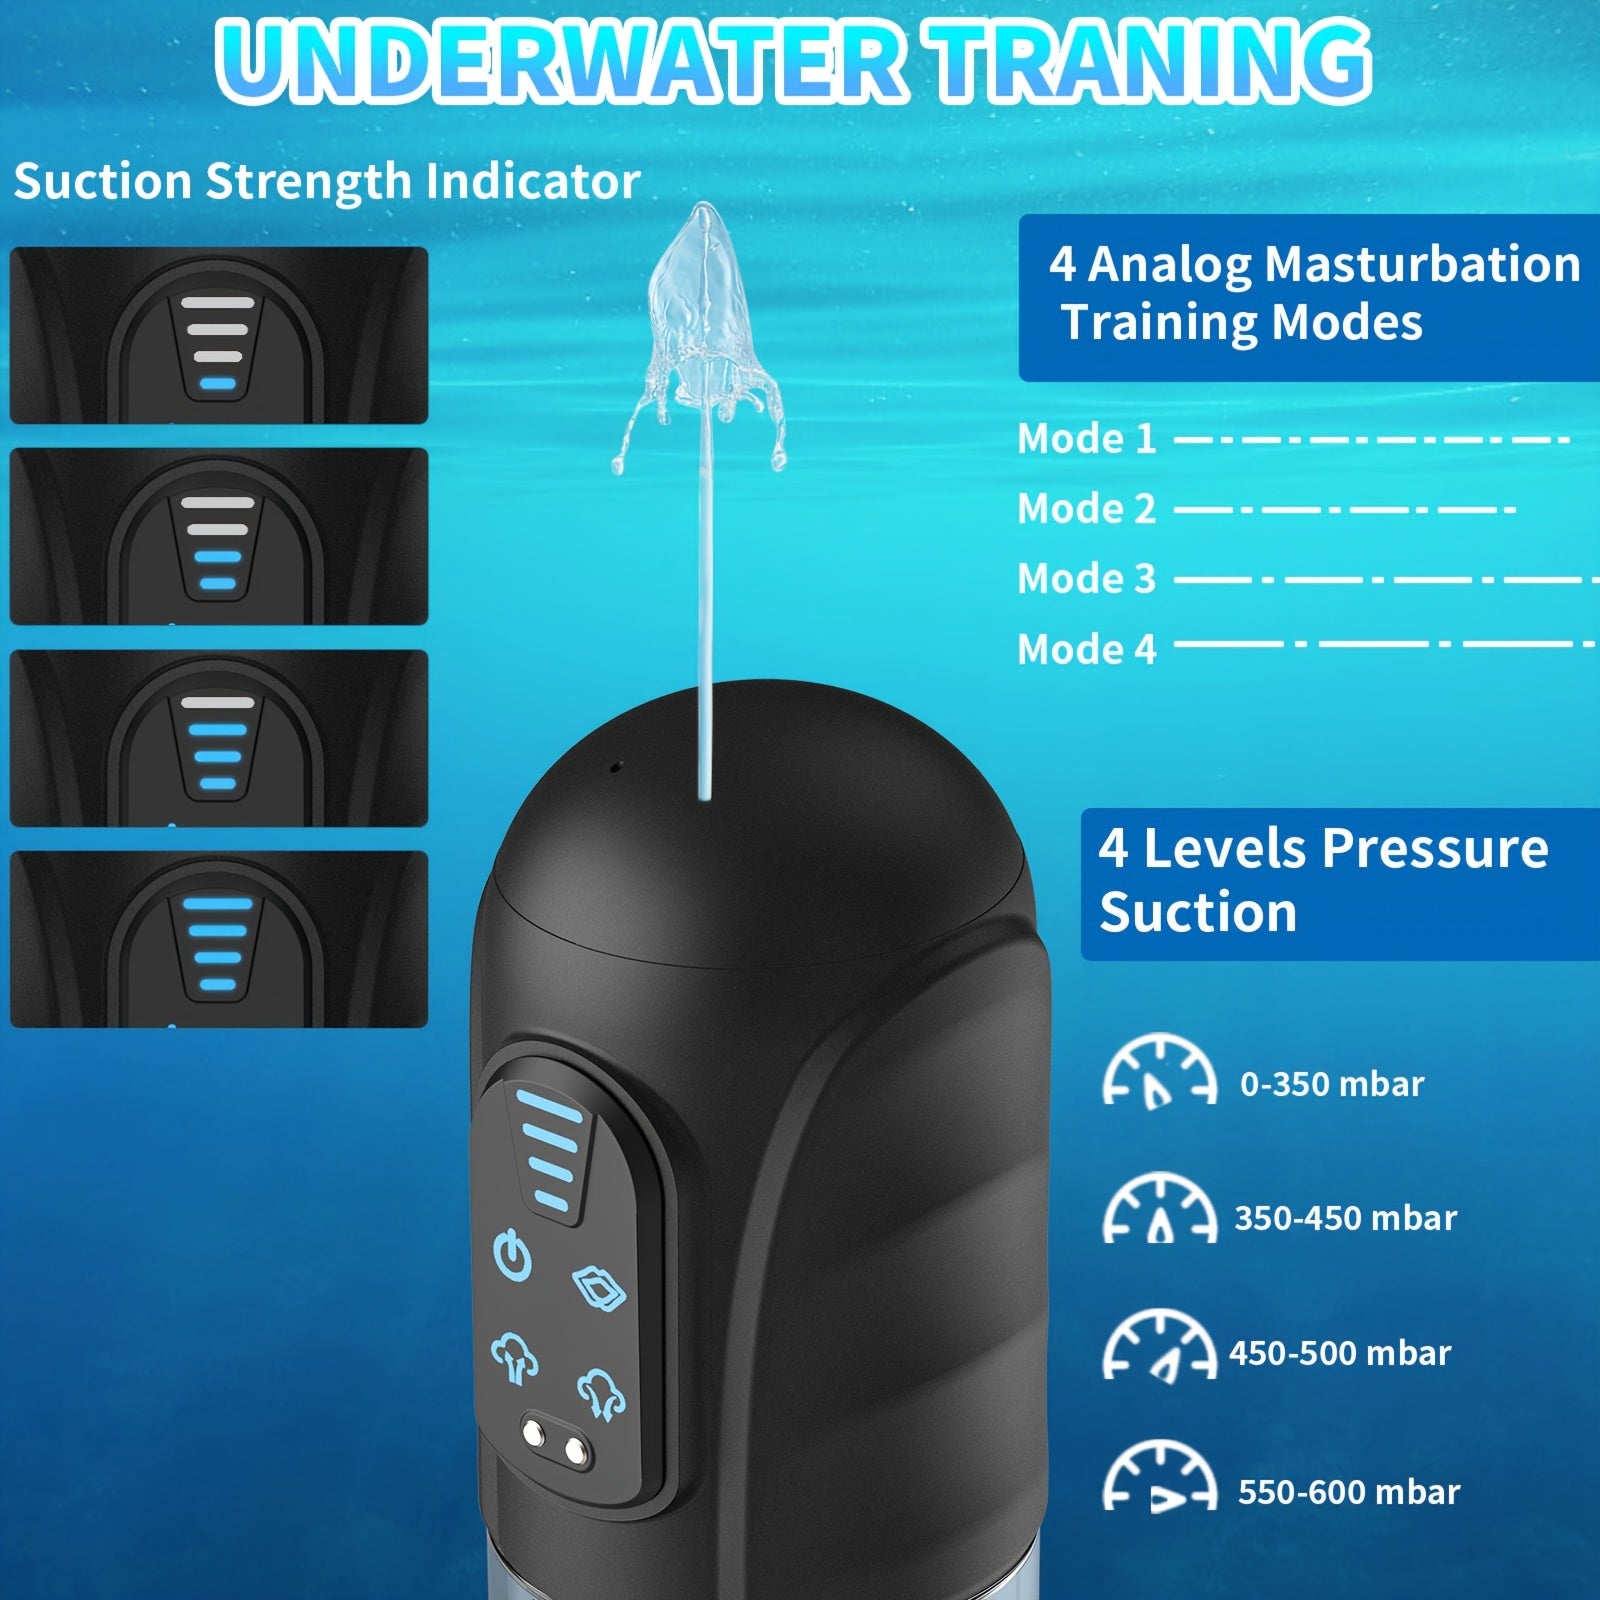 Vacuum Penis Pump Water Bath Massage Erection Aid 4 Modes Training & 4 Levels Preesure